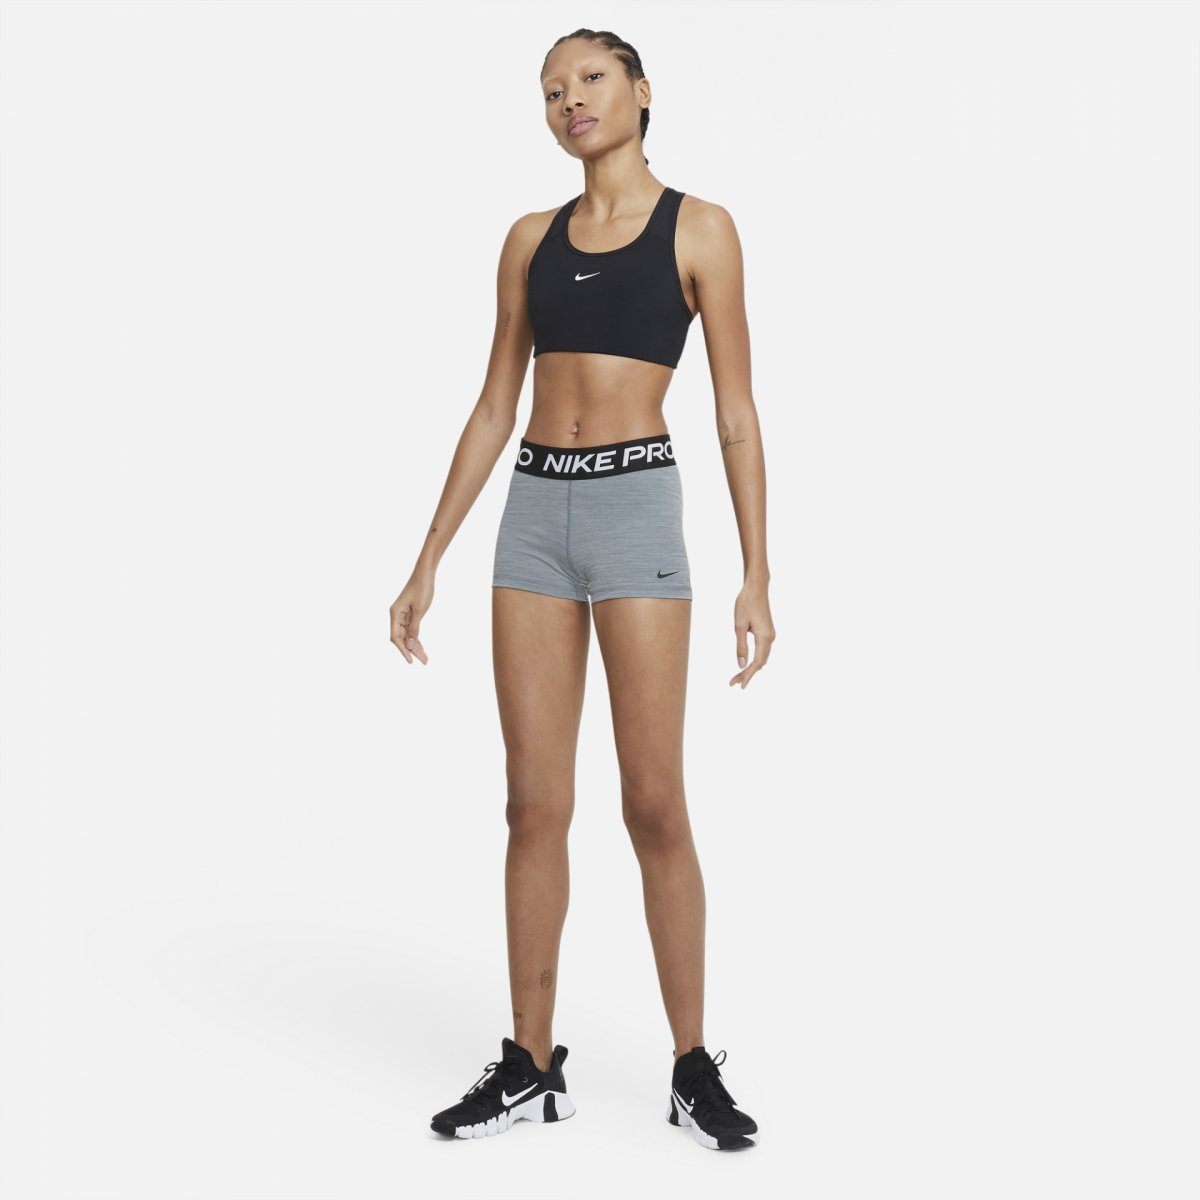 Nike Woman's Shorts Pro